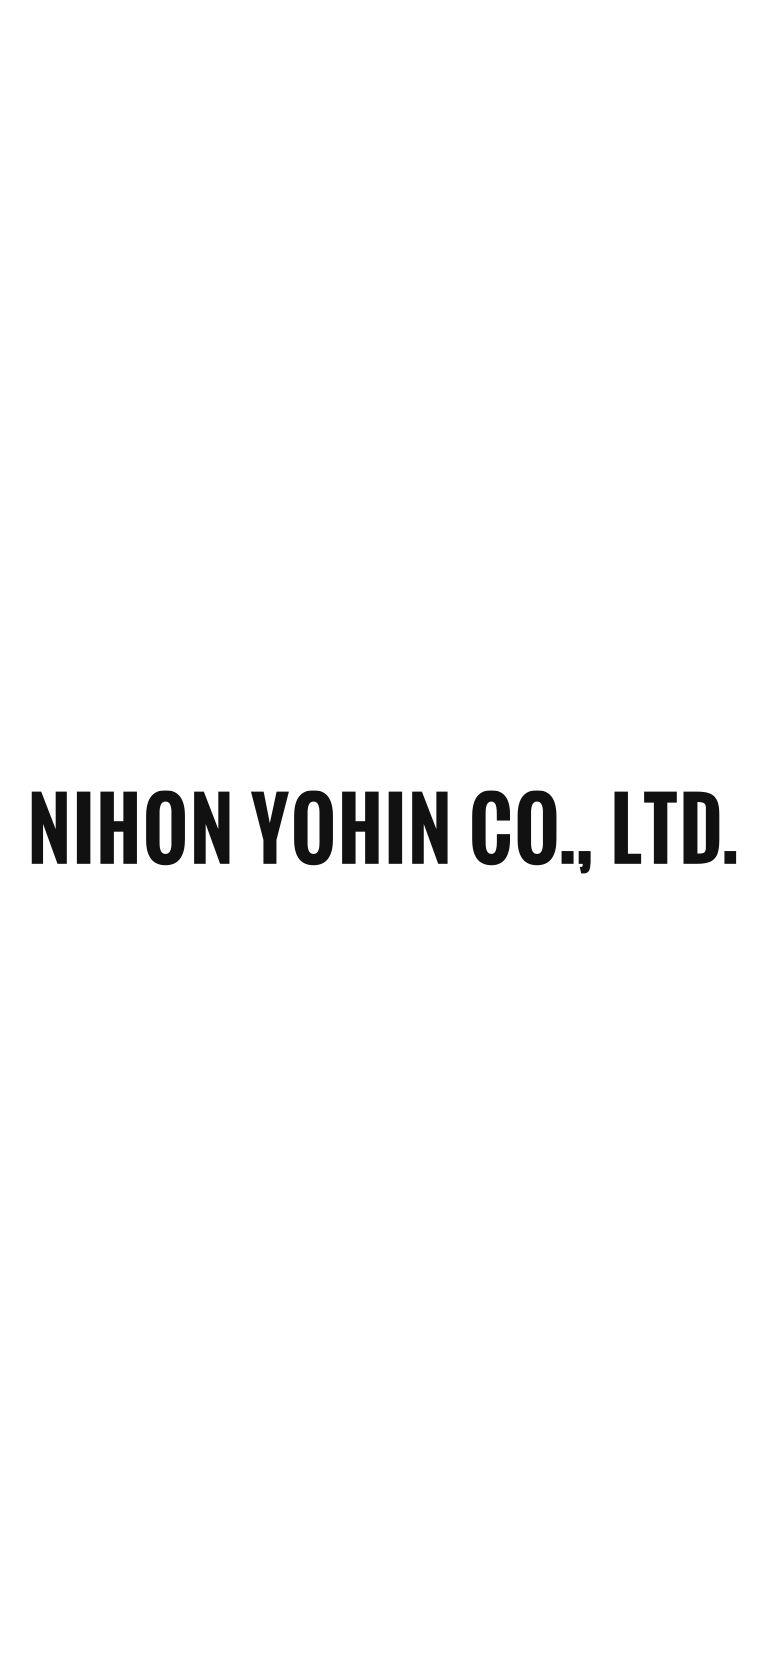 日本用品株式会社 - NIHON YOHIN CO., LTD.